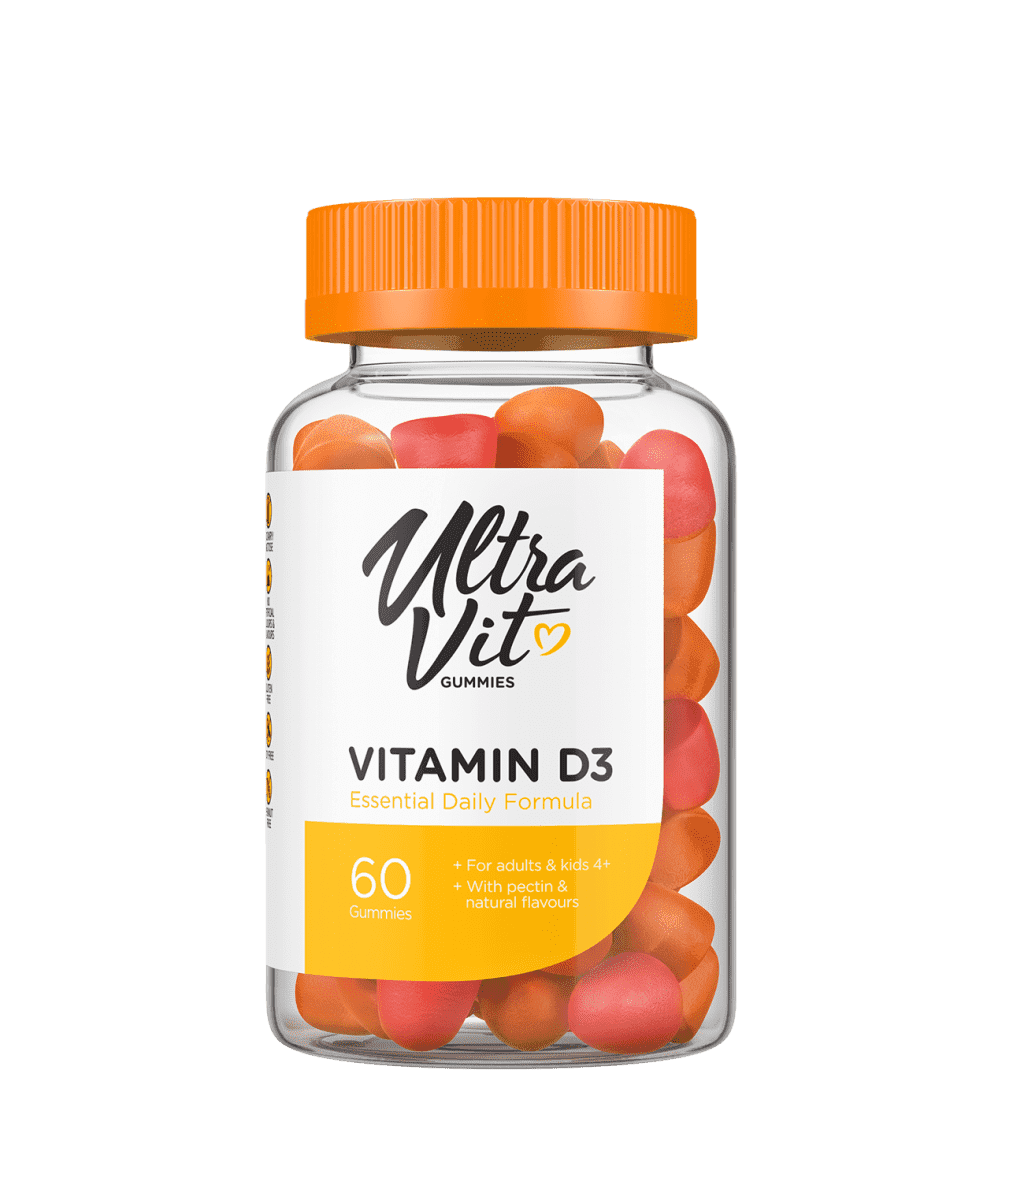 Vit vitamins. Ultra Vit - High Fiber / 60 Gummies. Витамин д3 Ultravit Gummies жевательный. Ультравит витамины д3 60. Ультра вит витамин д3 600iu.